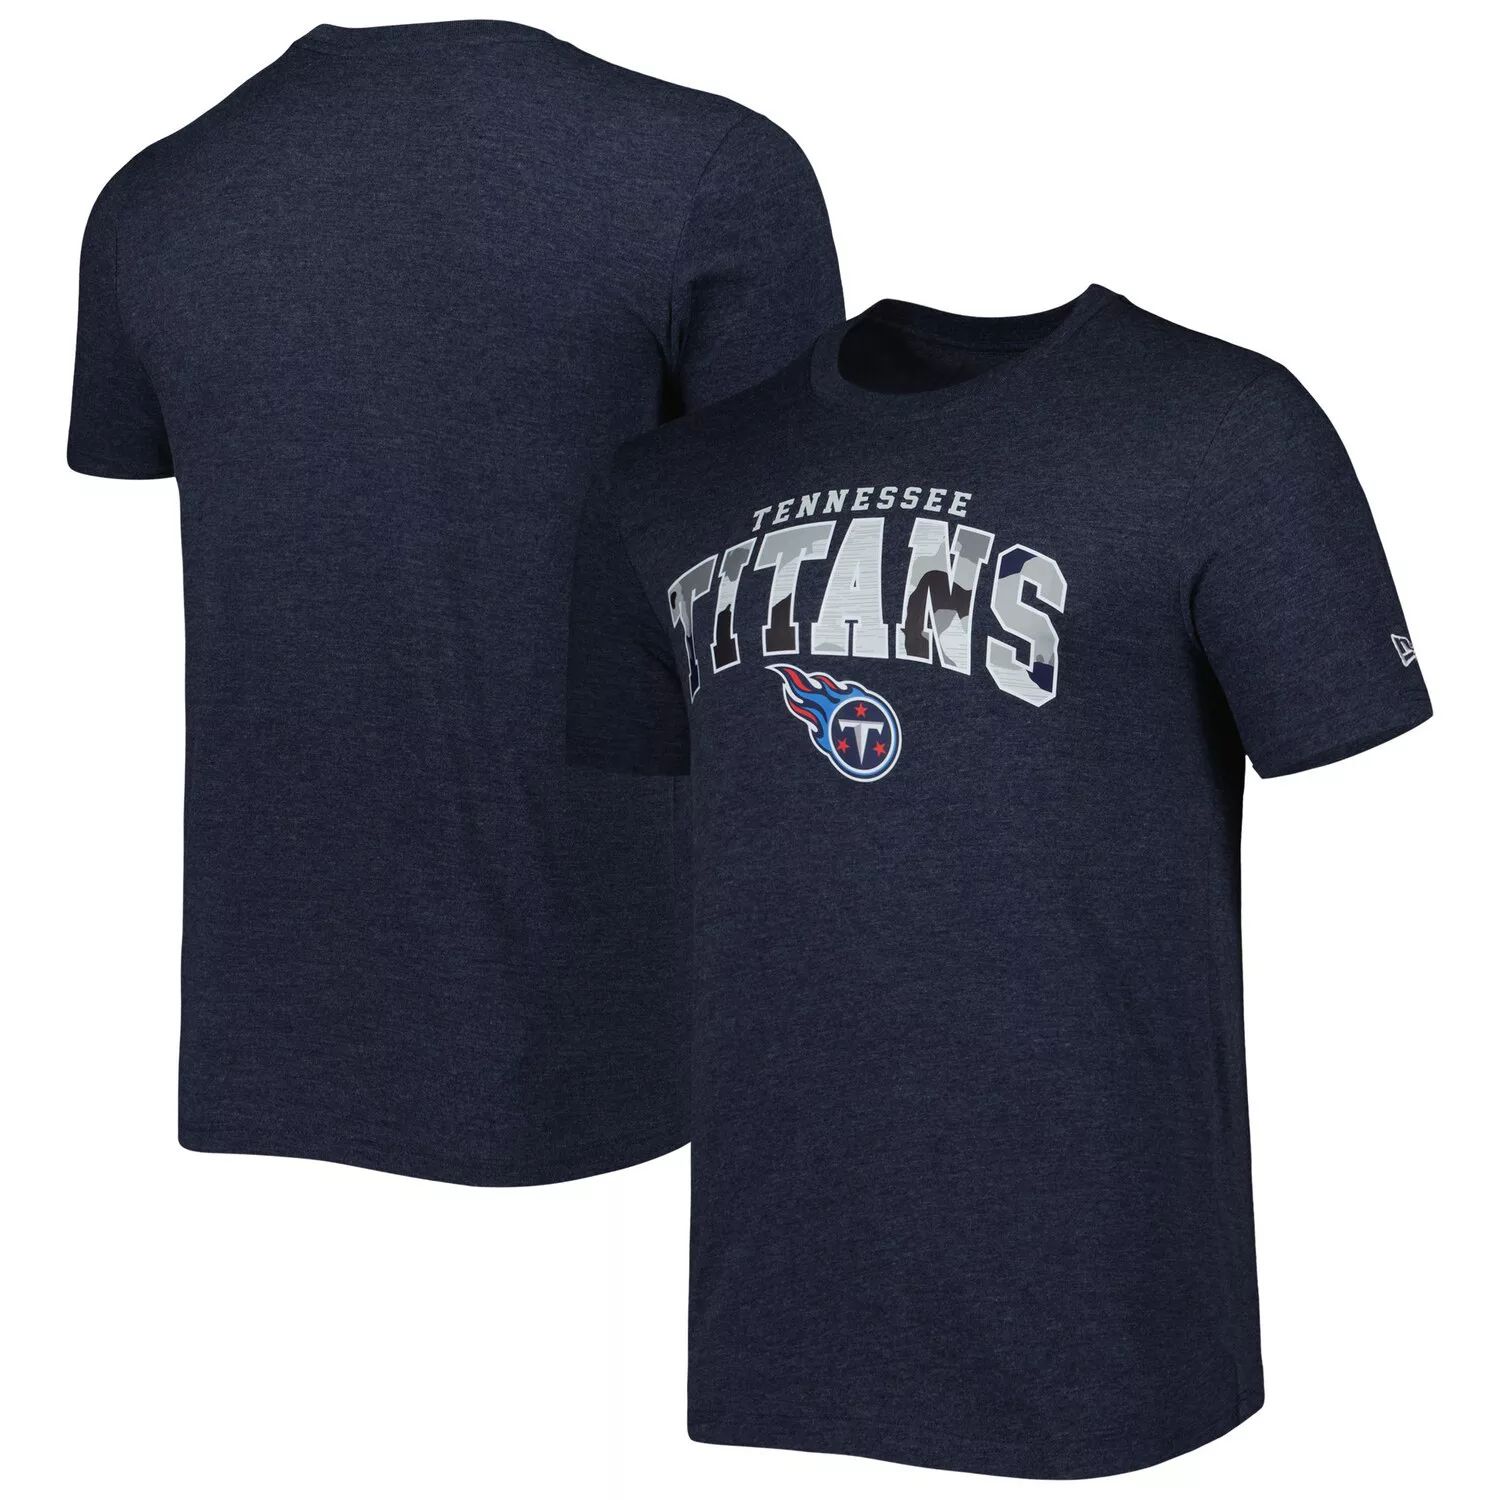 Мужская темно-синяя футболка с принтом Tennessee Titans Training Collection New Era